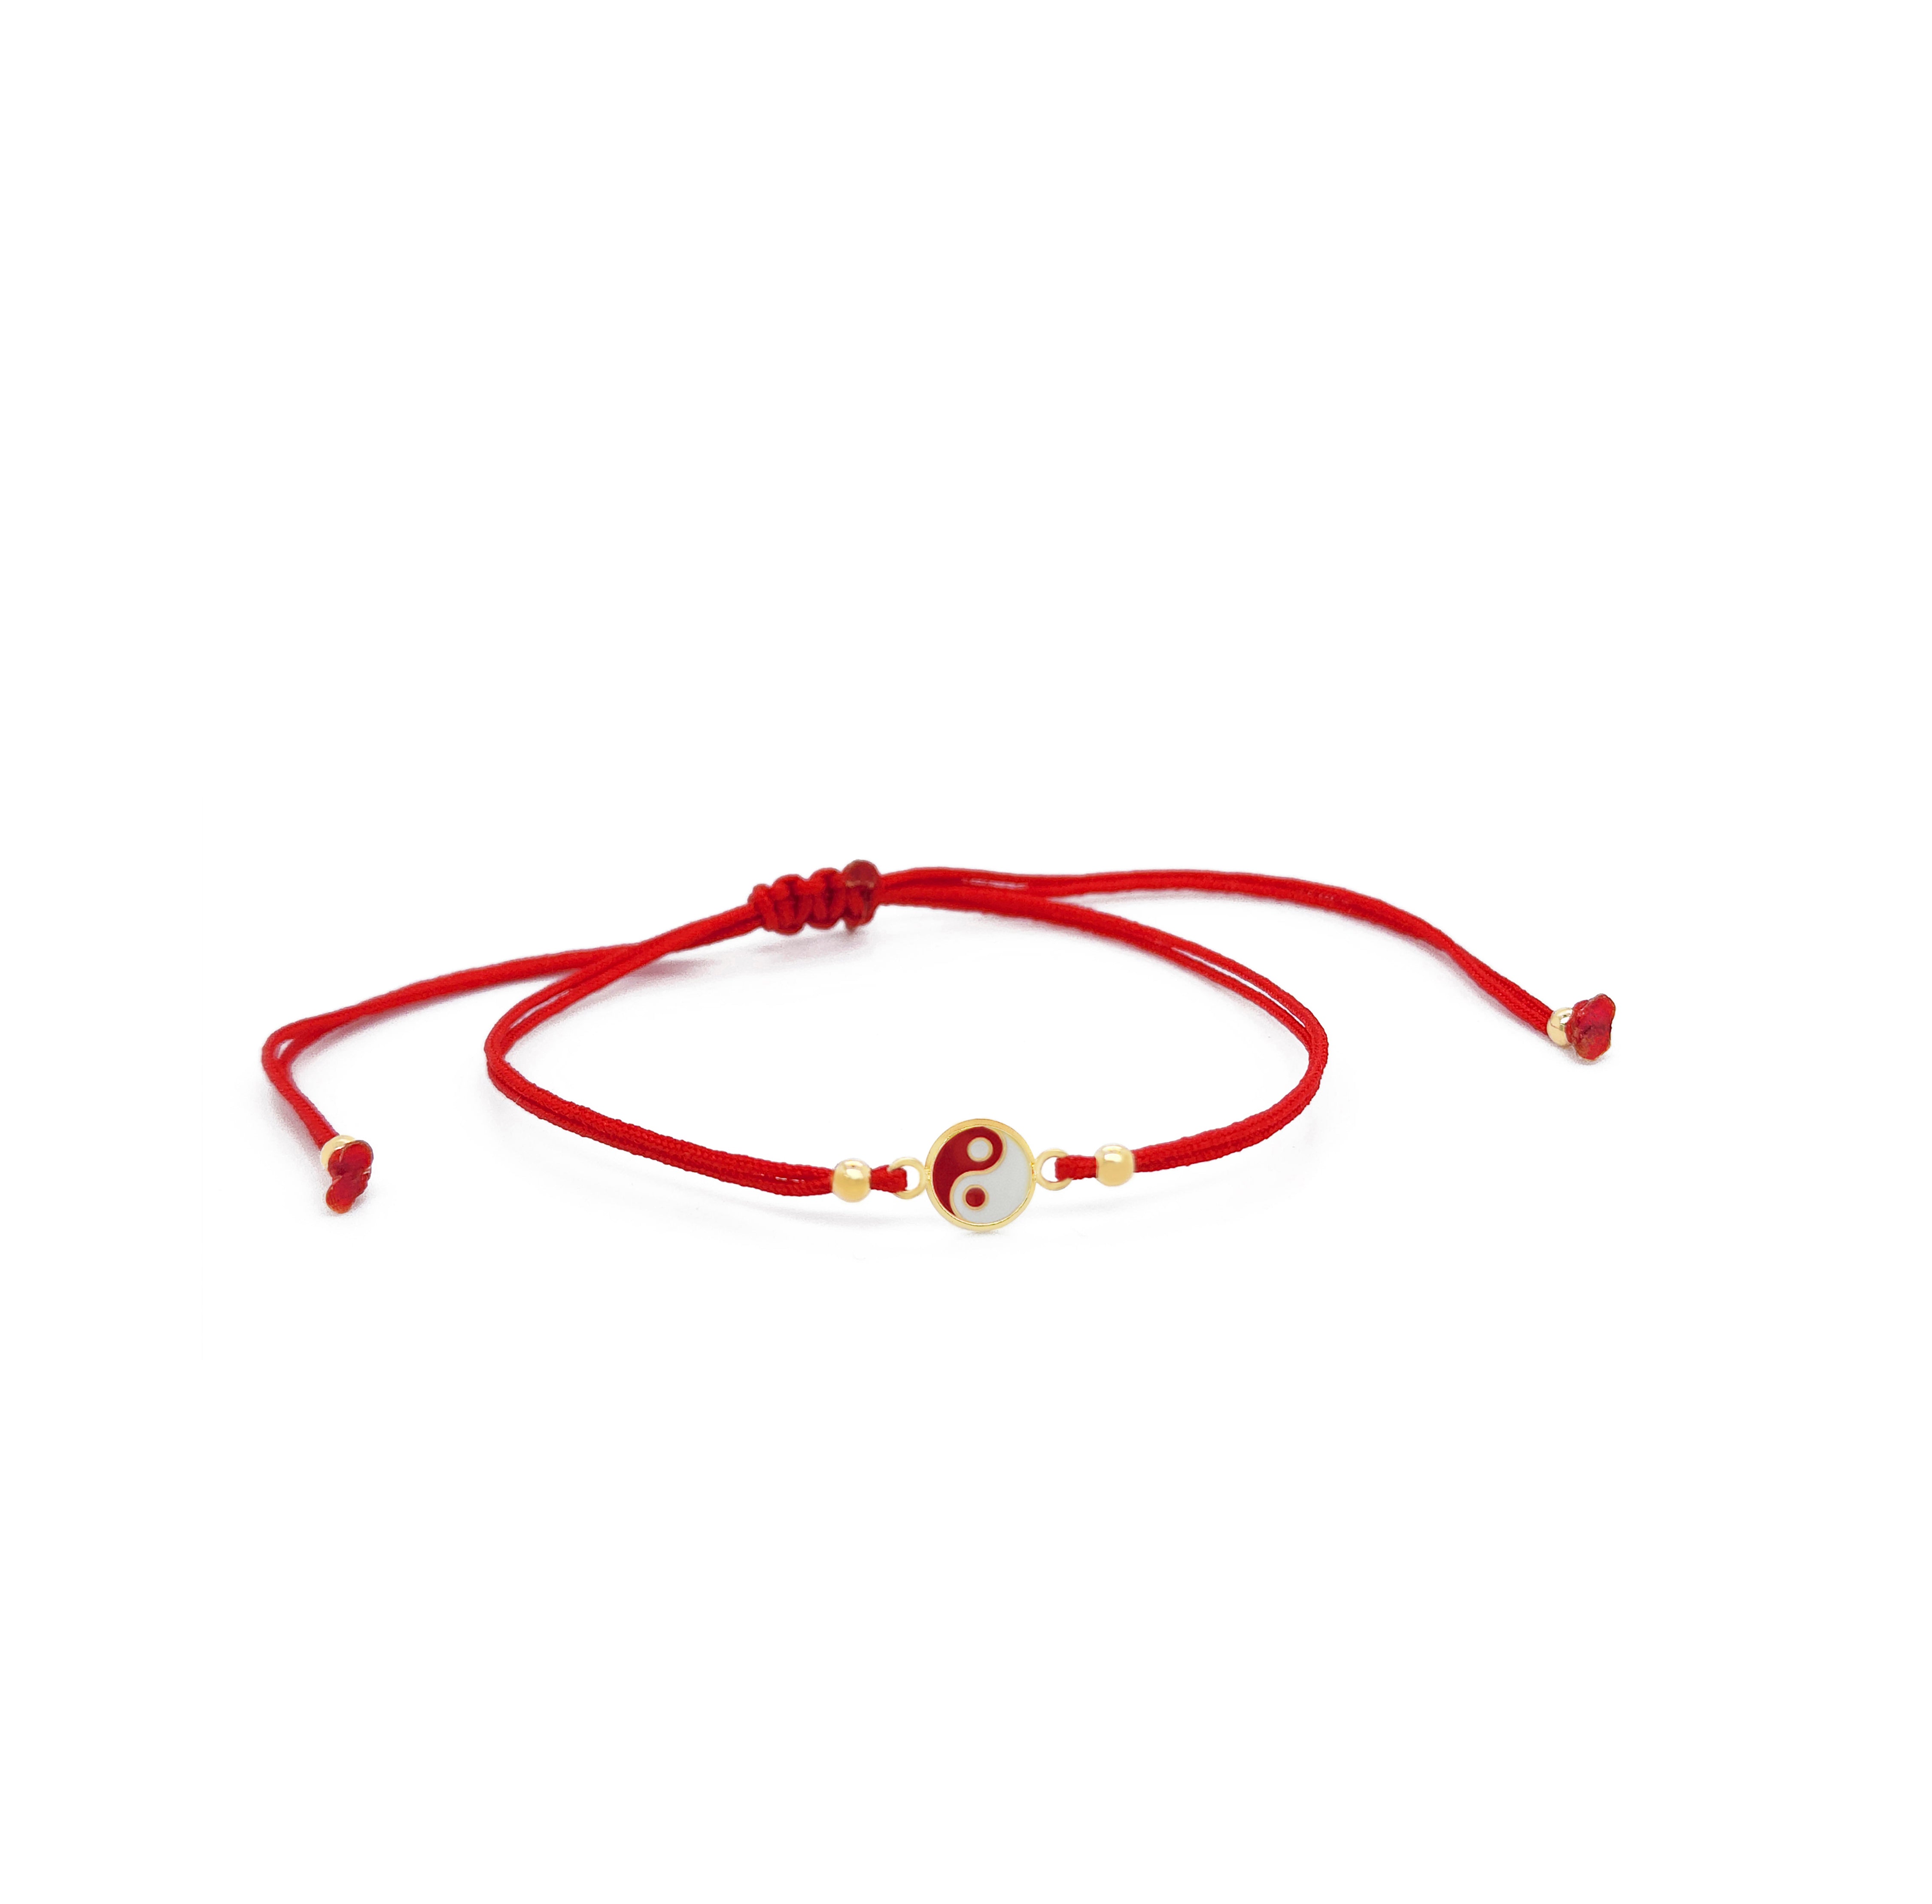 Yin Yang Adjustable Cord Bracelet | Shop Today. Get it Tomorrow! |  takealot.com